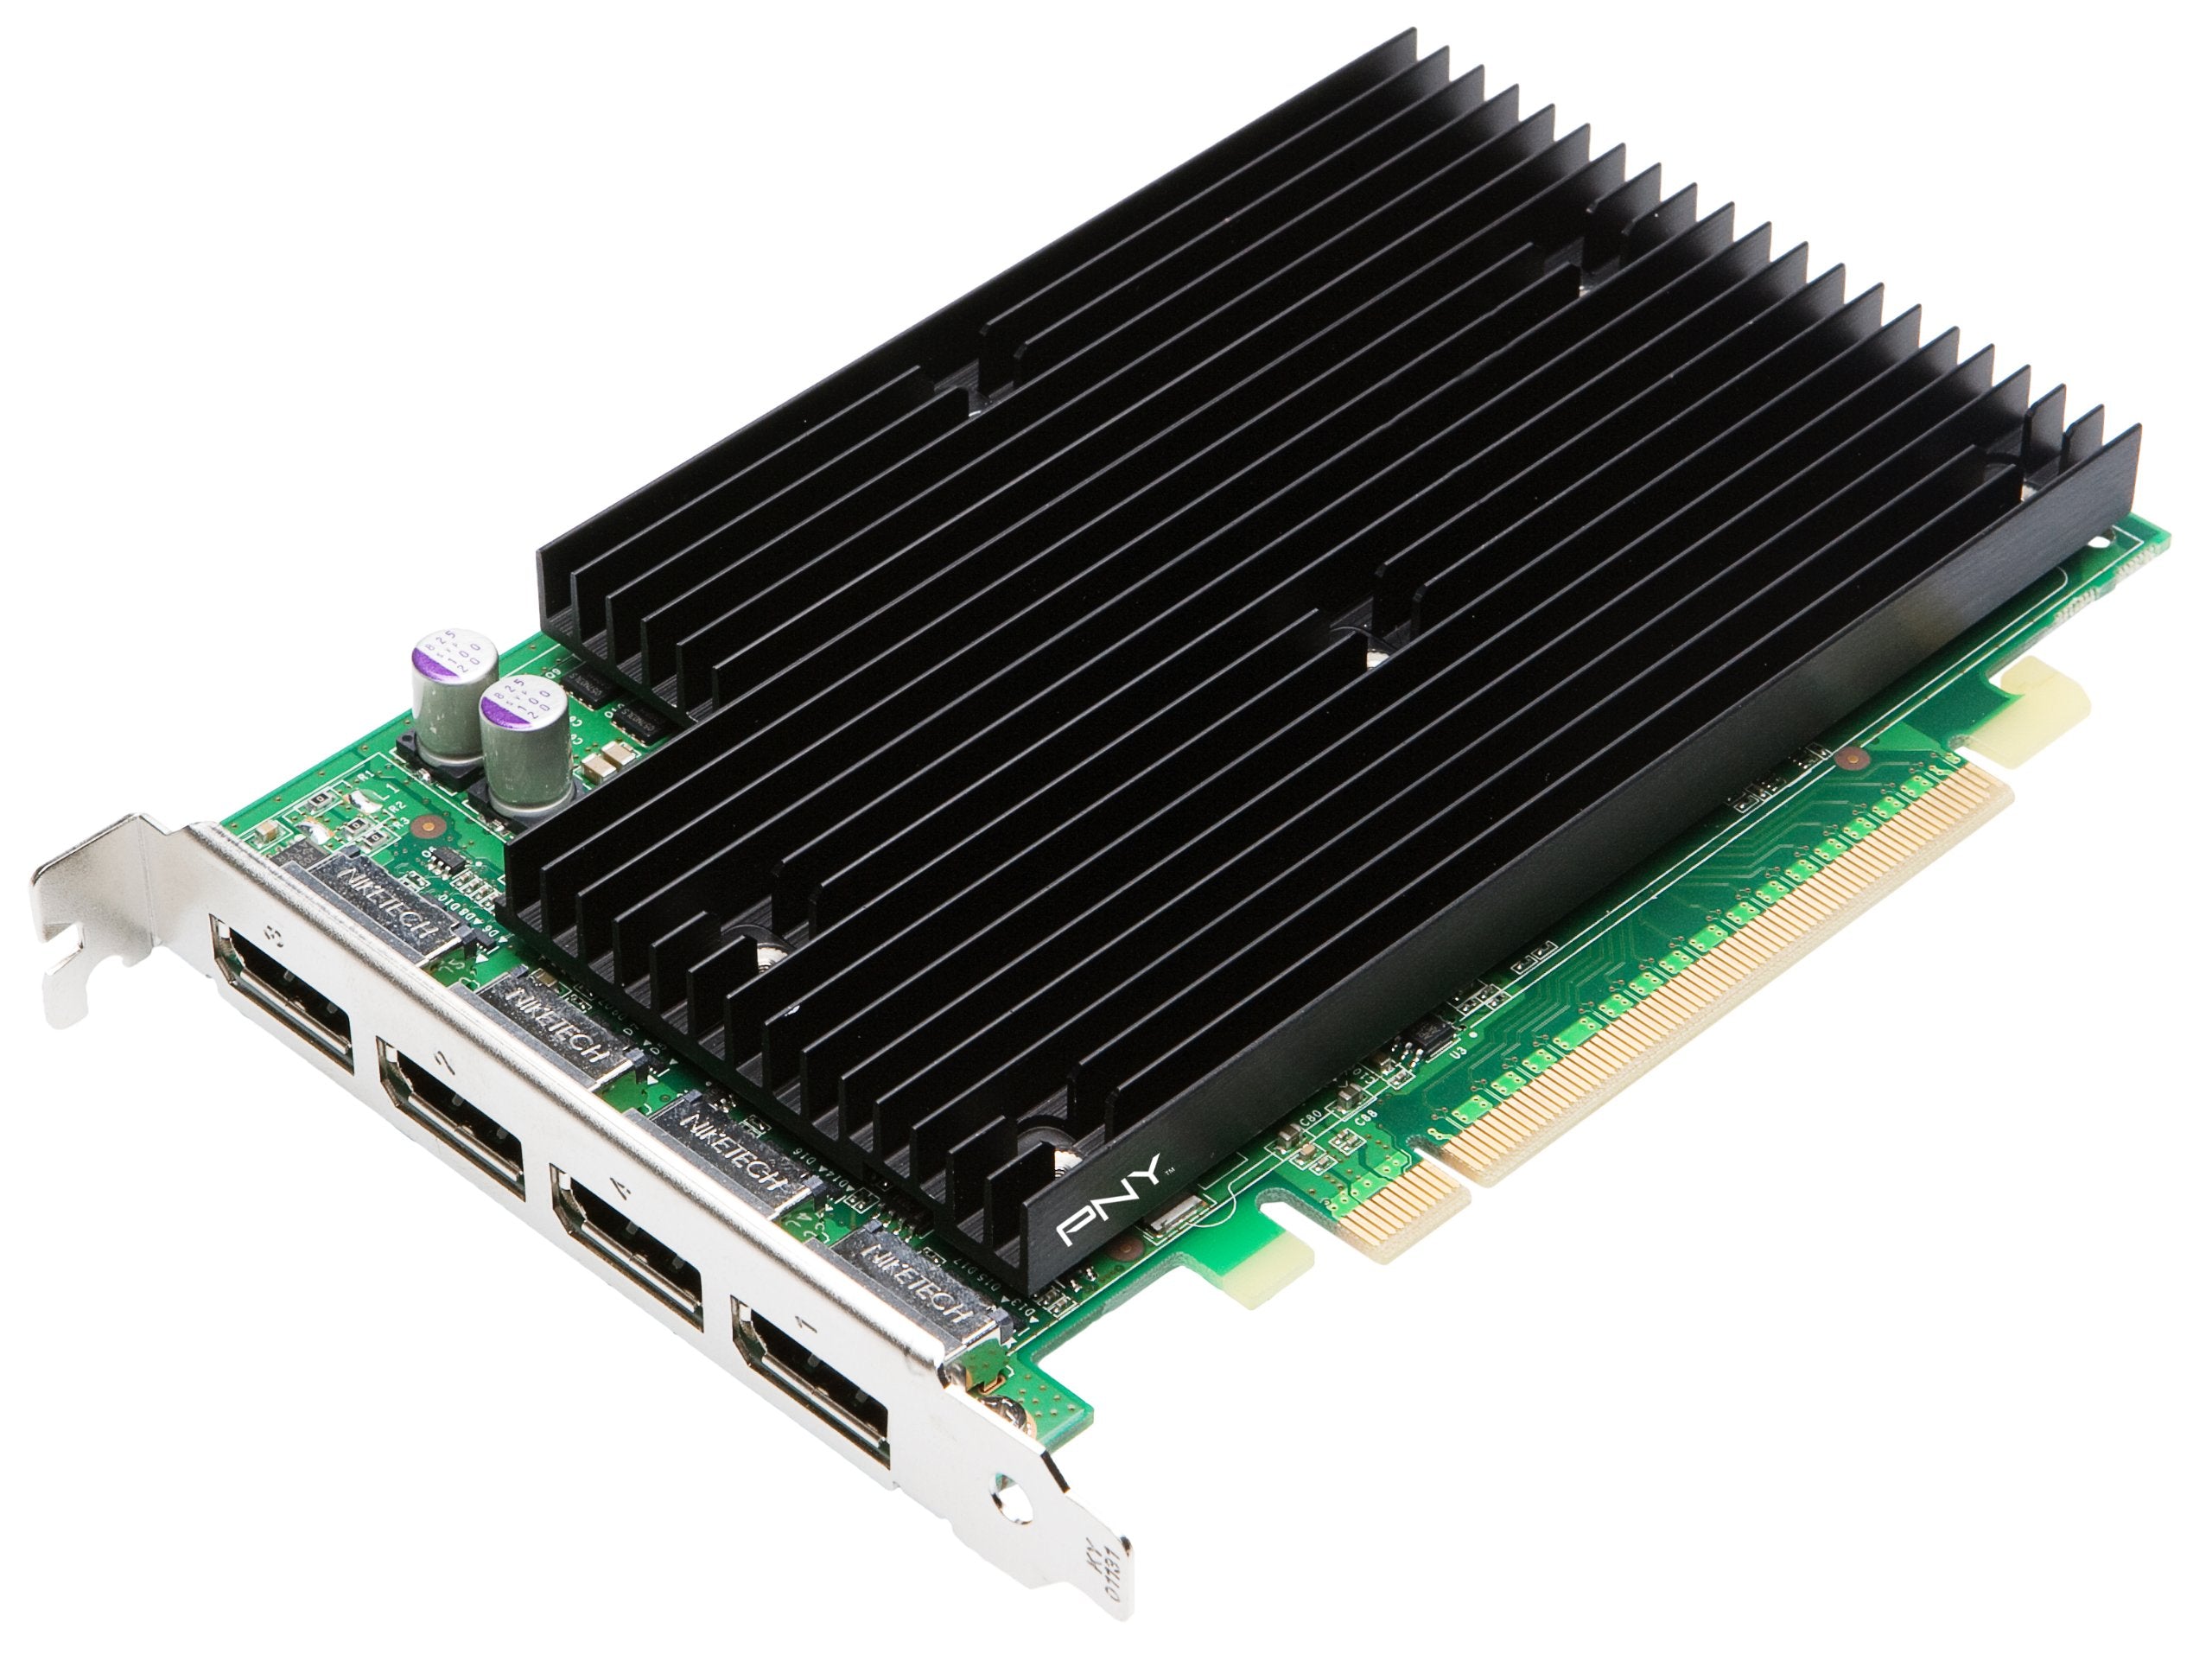 NVIDIA Quadro NVS 450 by PNY 512MB GDDR3 PCI Express Gen 2 x16 Quad DisplayPort Graphics Card (Used, System Pull)